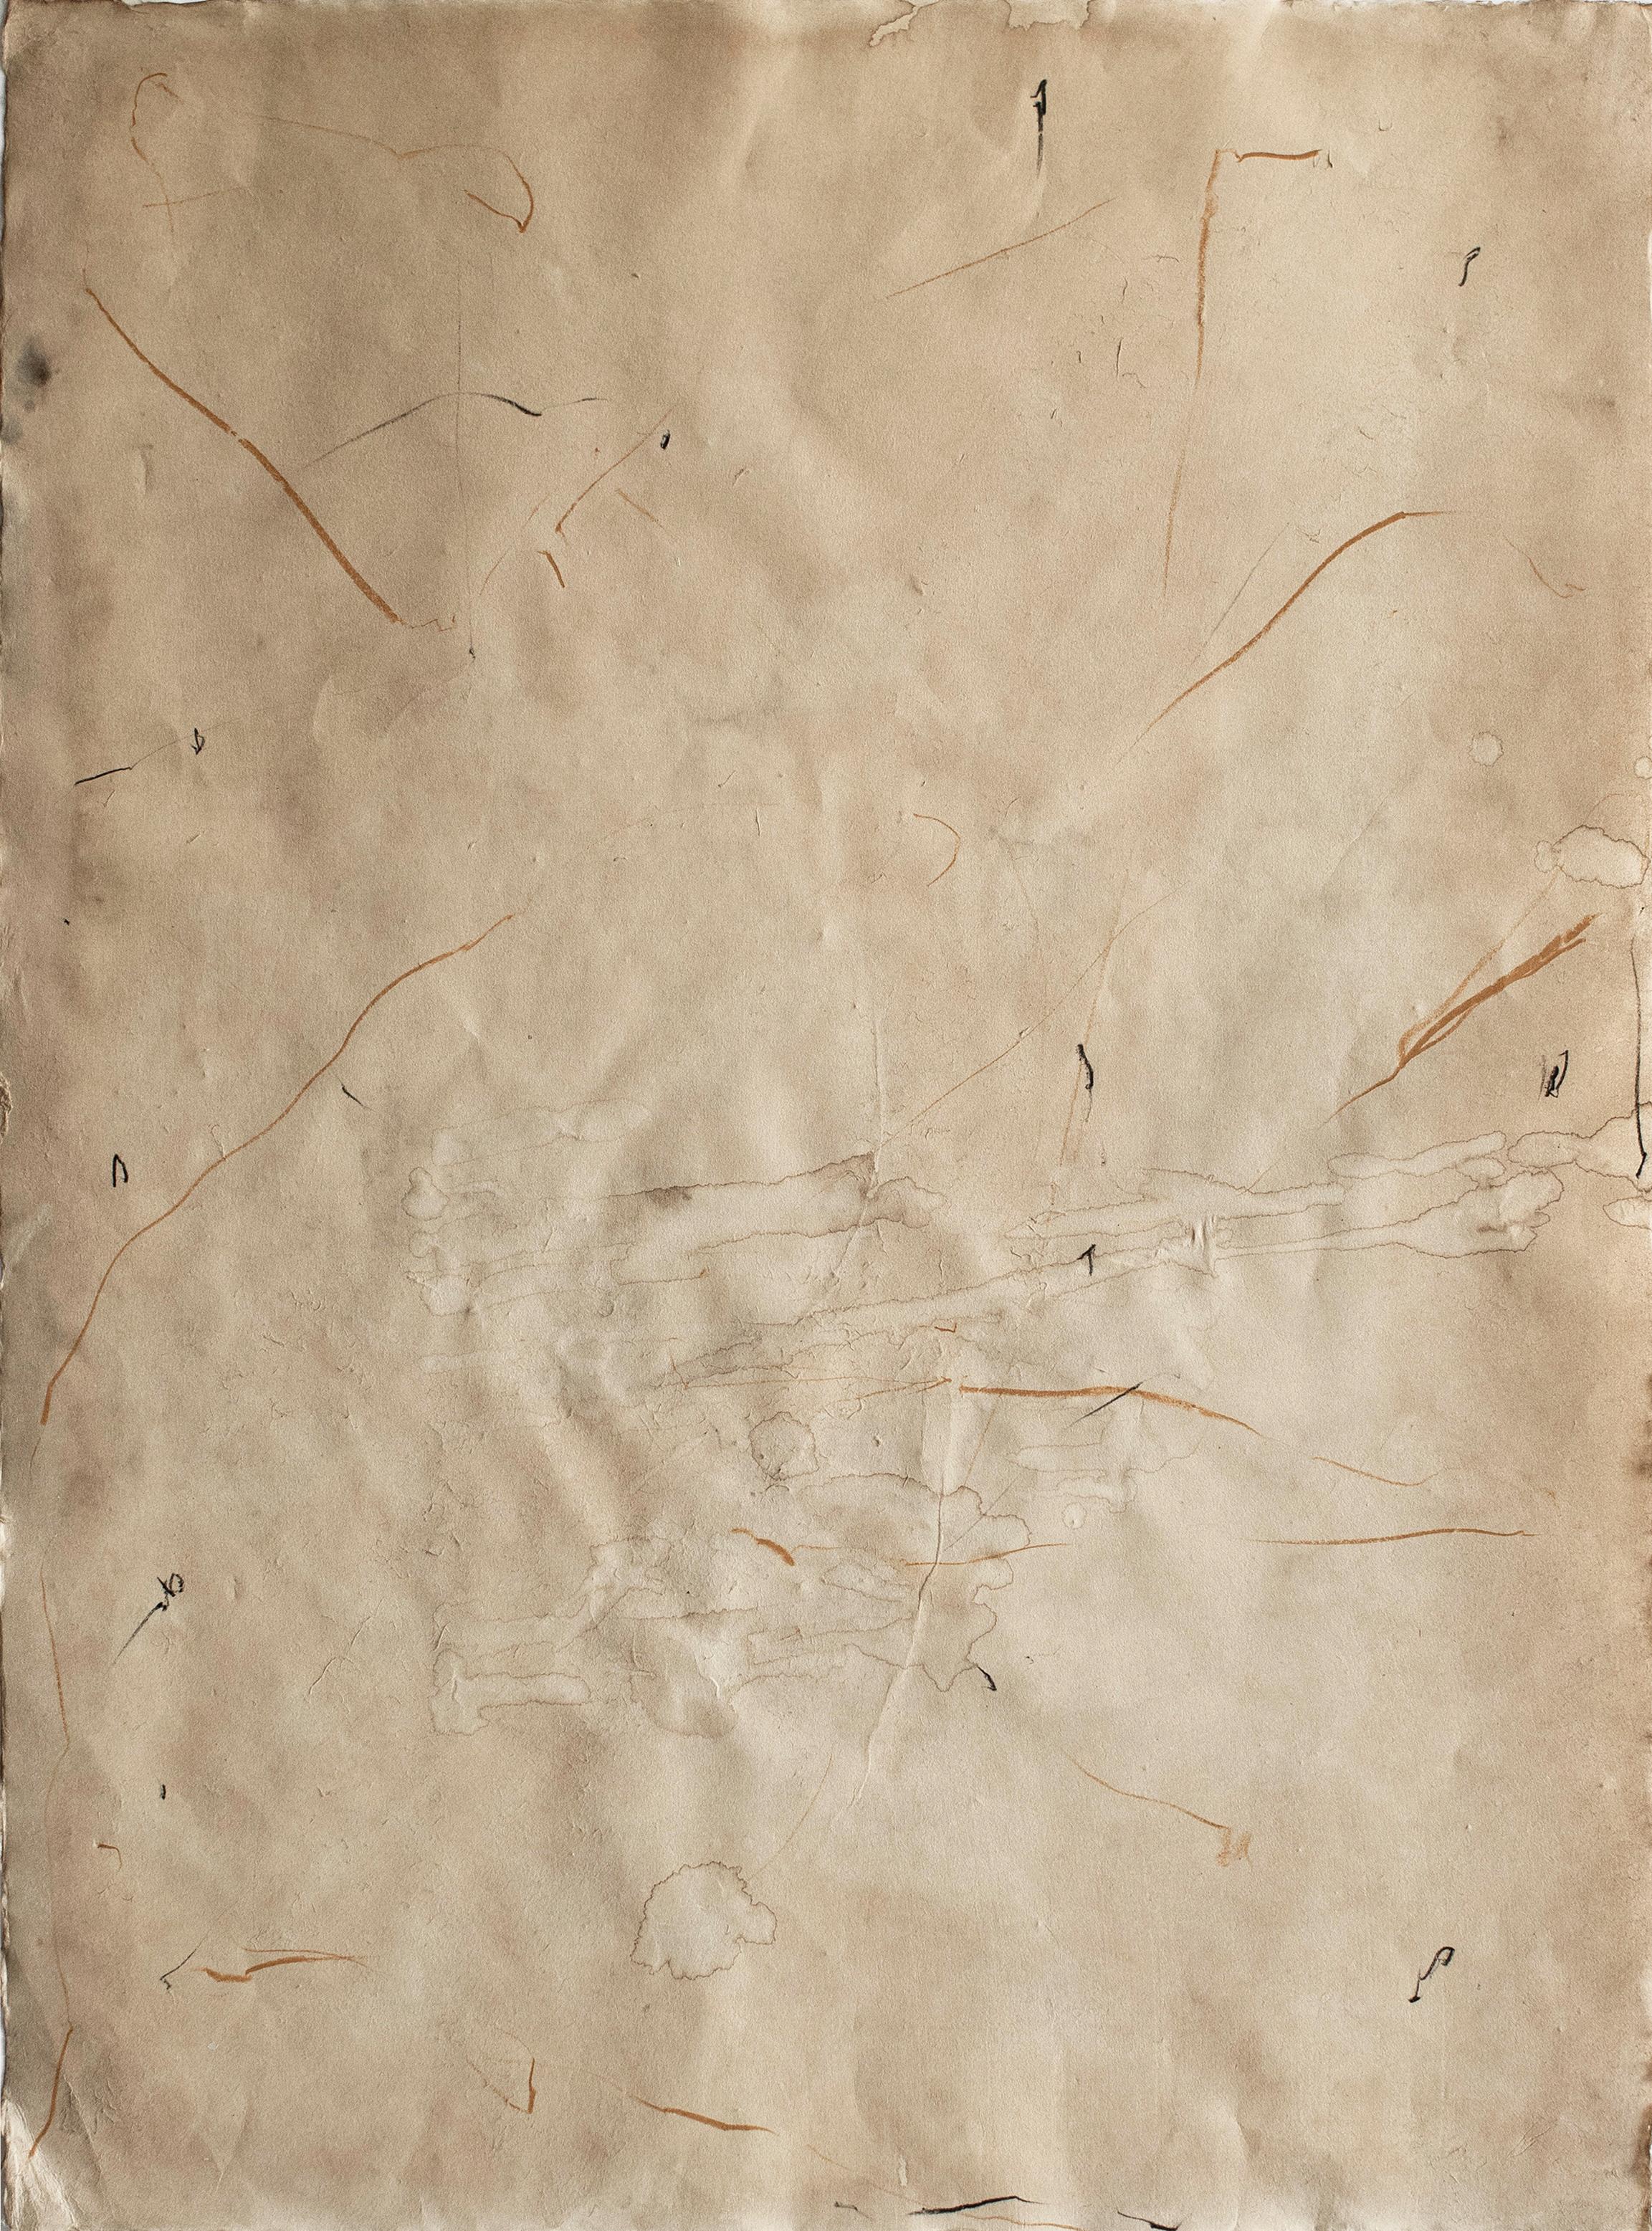 む, Einzigartige Arbeit auf Papier. Mixed-Media-Gemälde auf Awagami-Papier